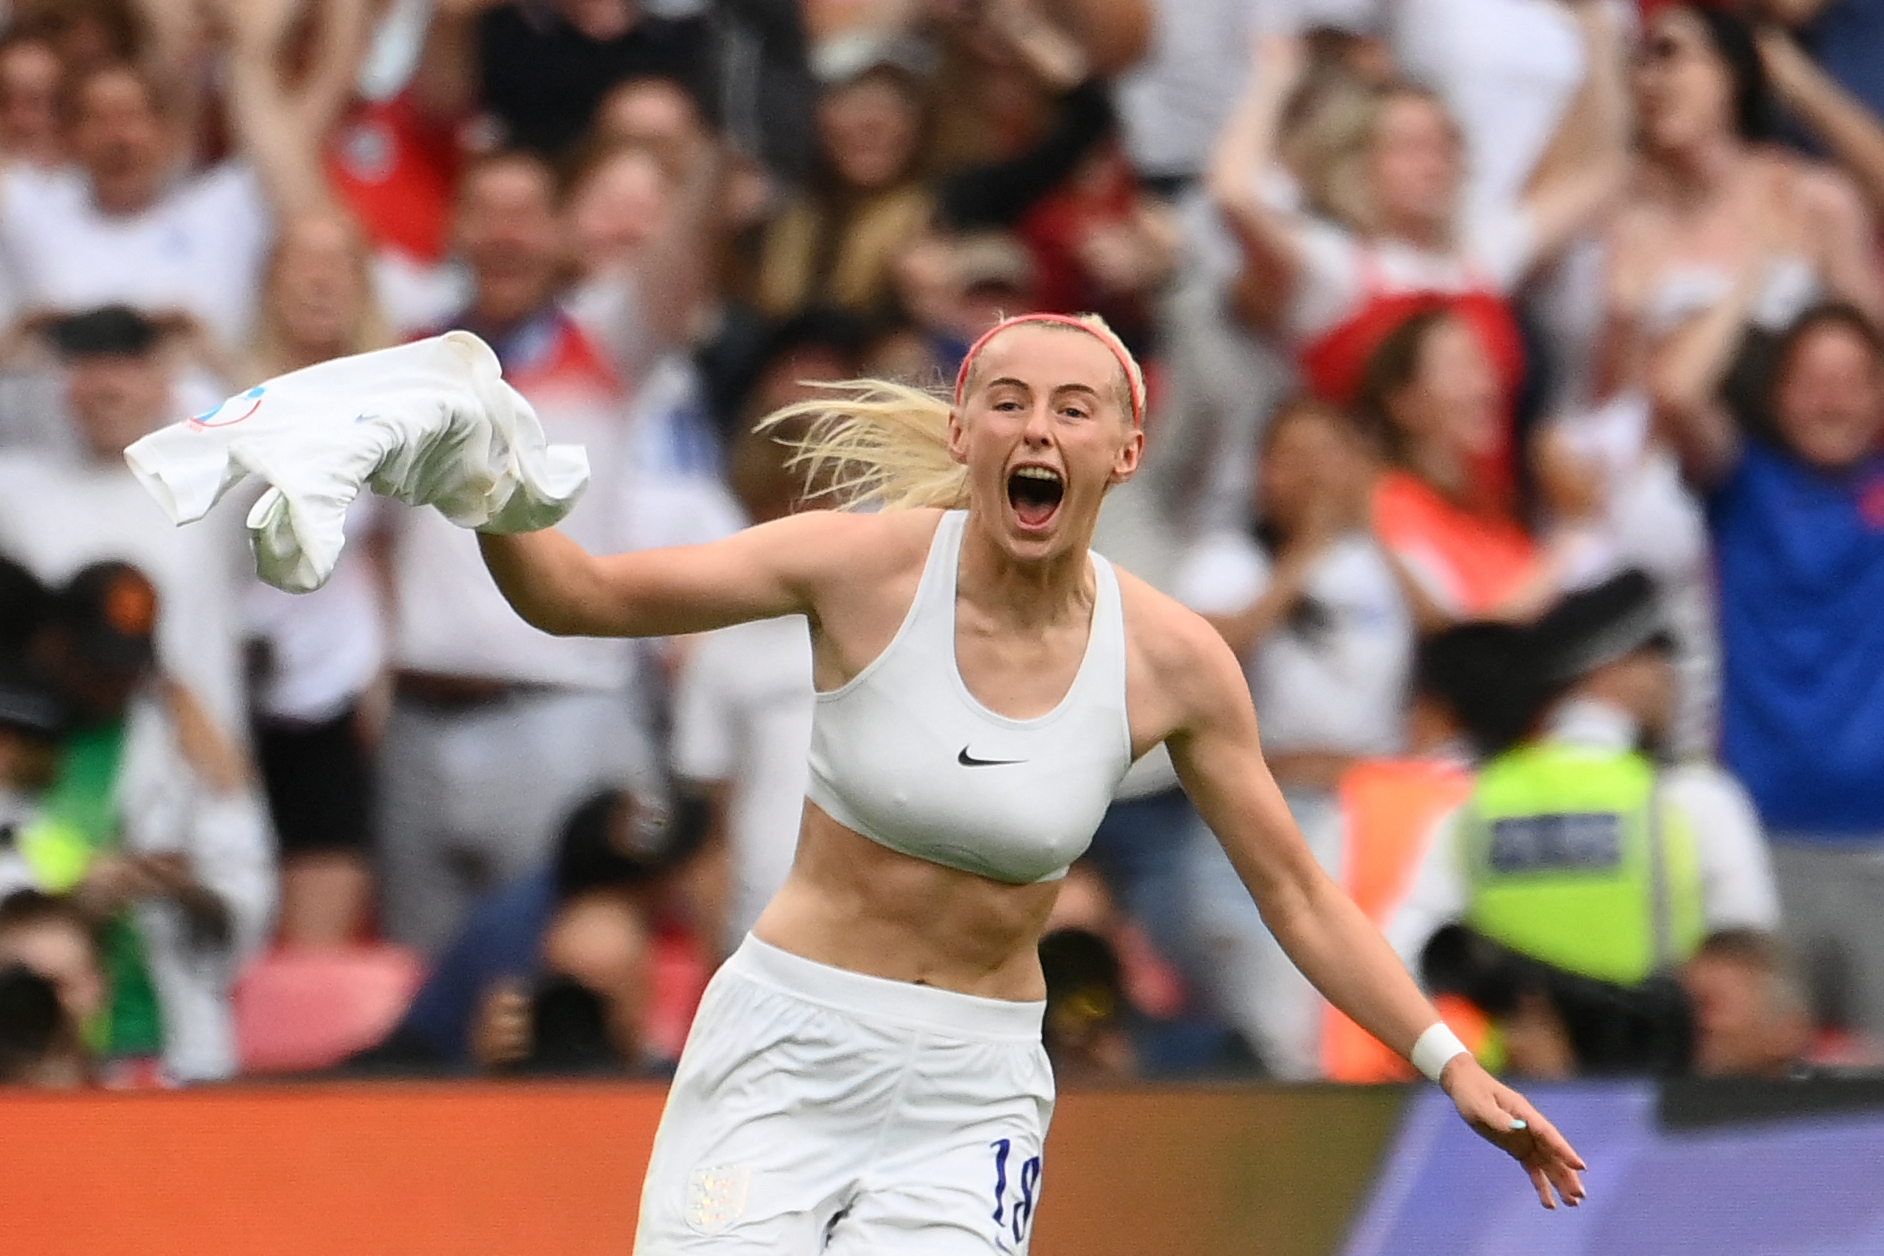 Football striker Chloe Kelly celebrating scoring a goal during the UEFA Women's Euro 2022 final football match.